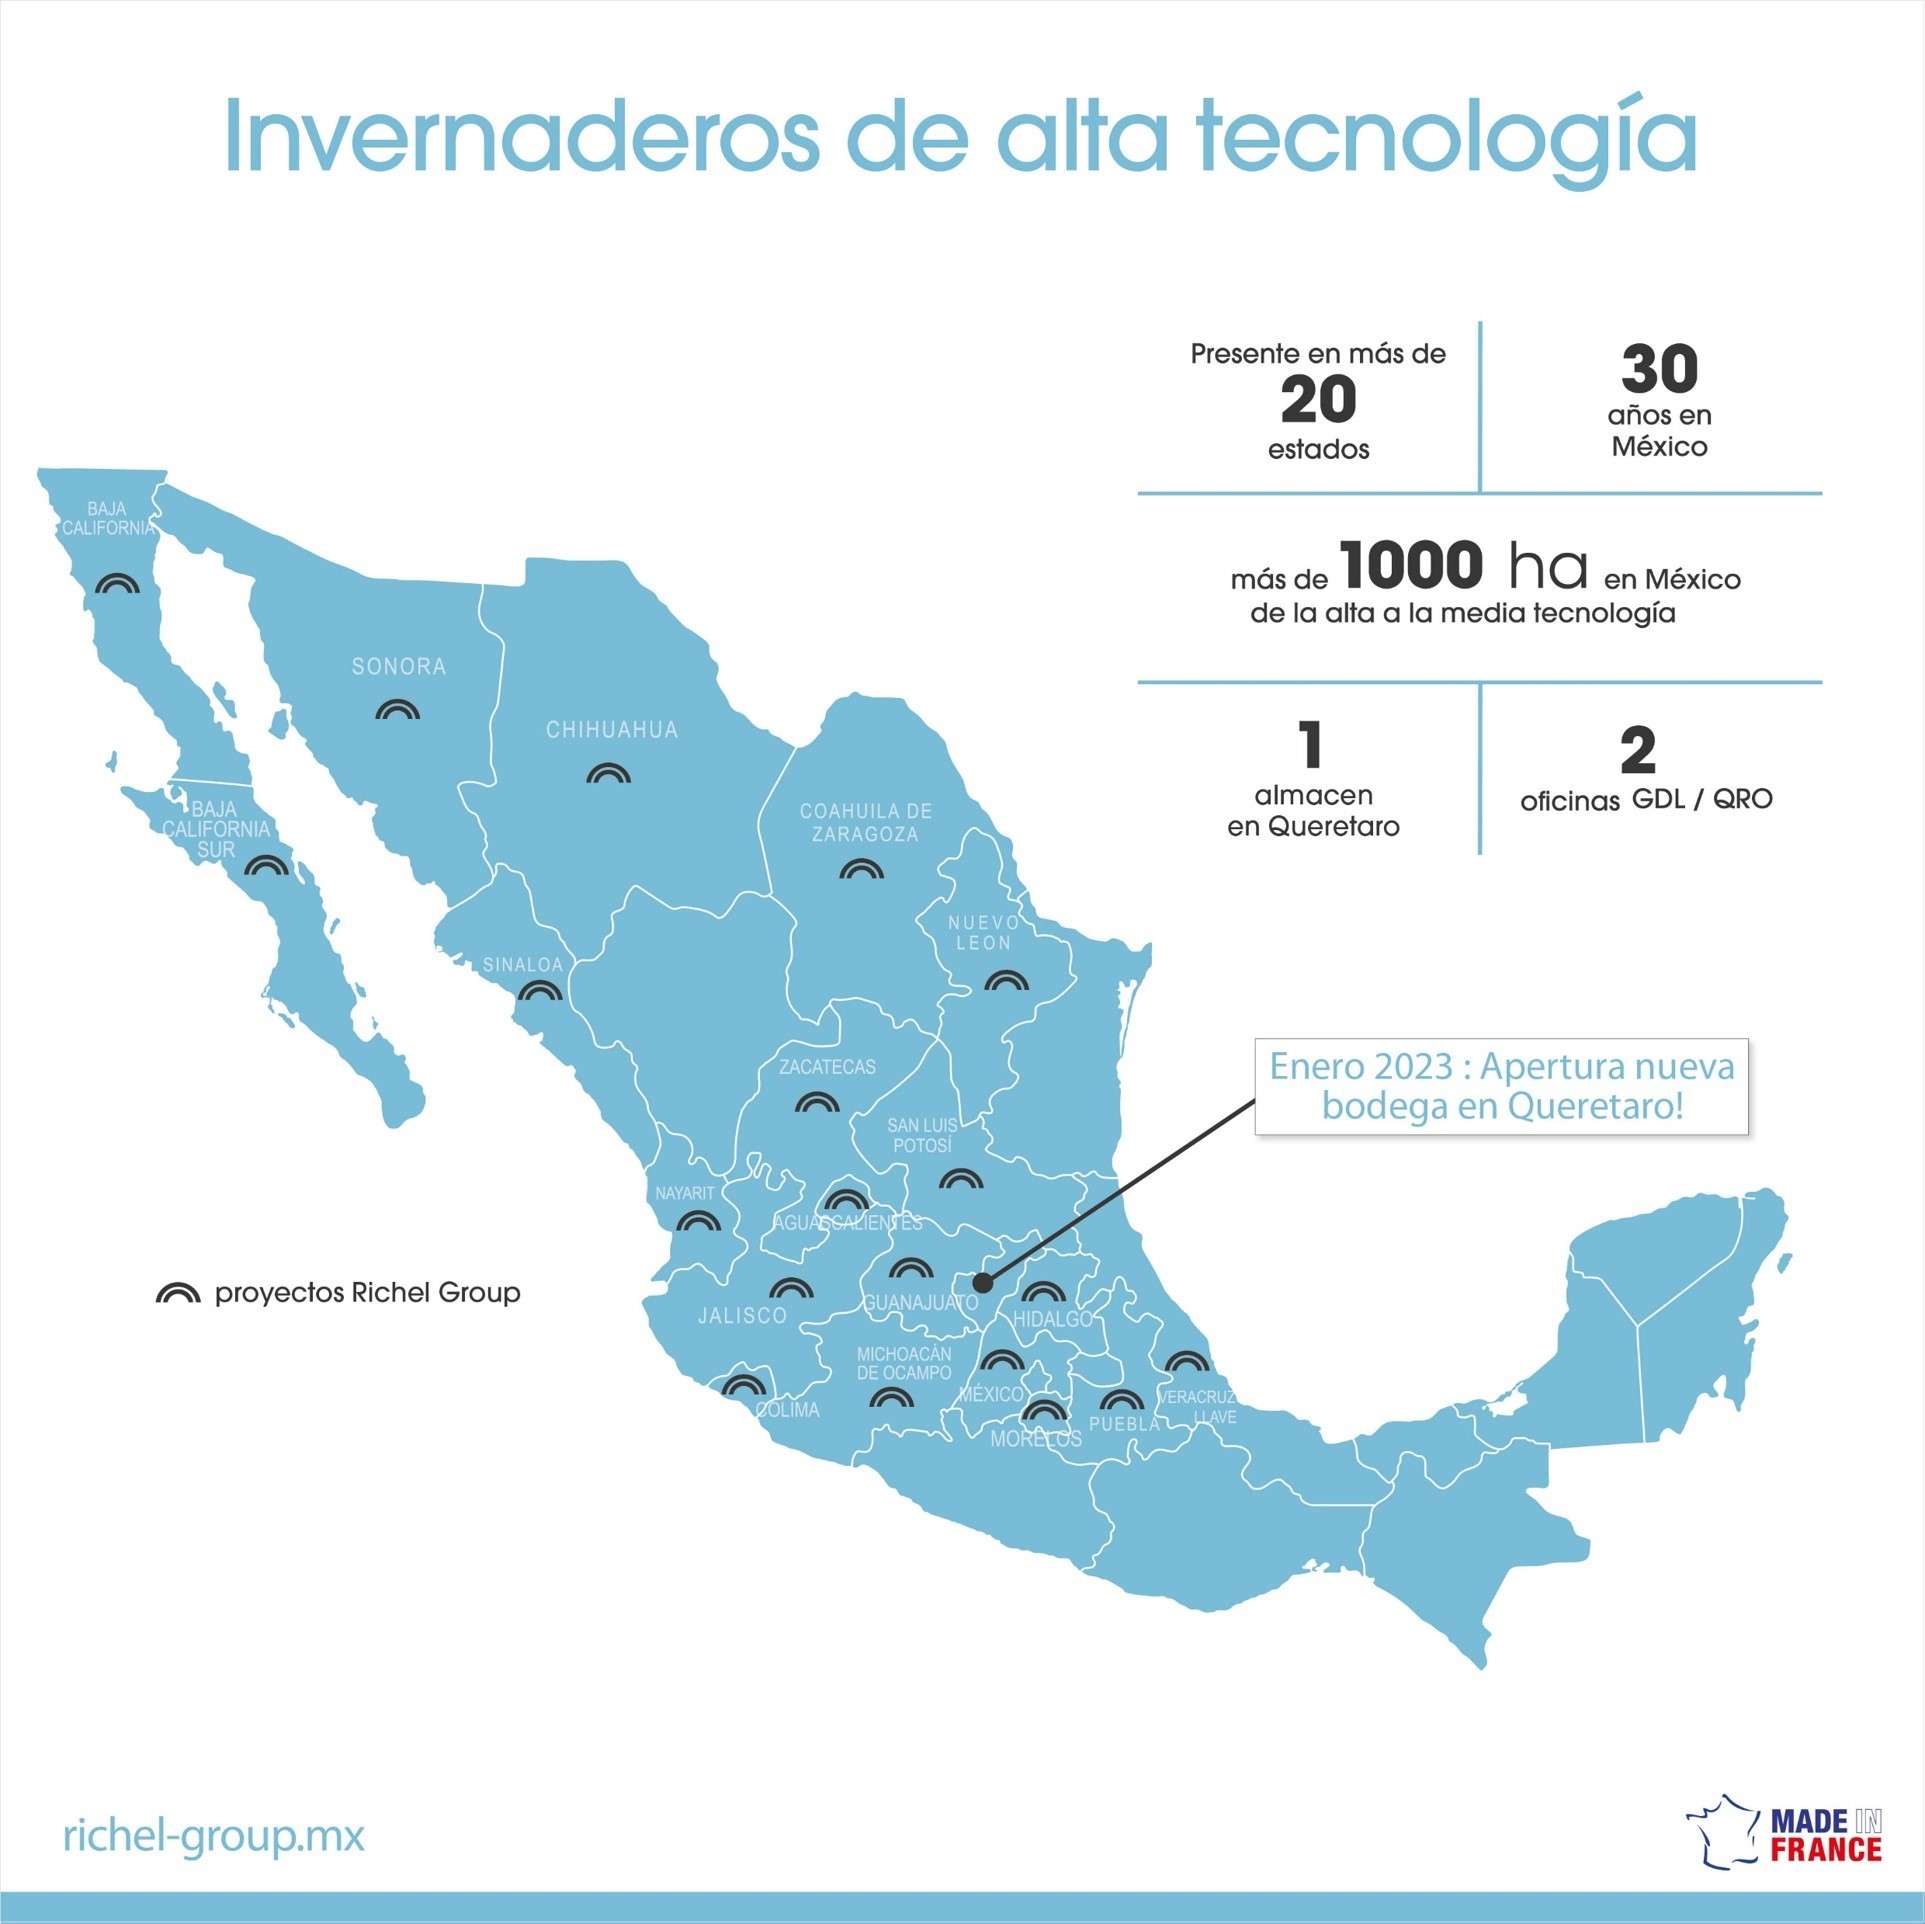 Richel Mexico expands local facilities